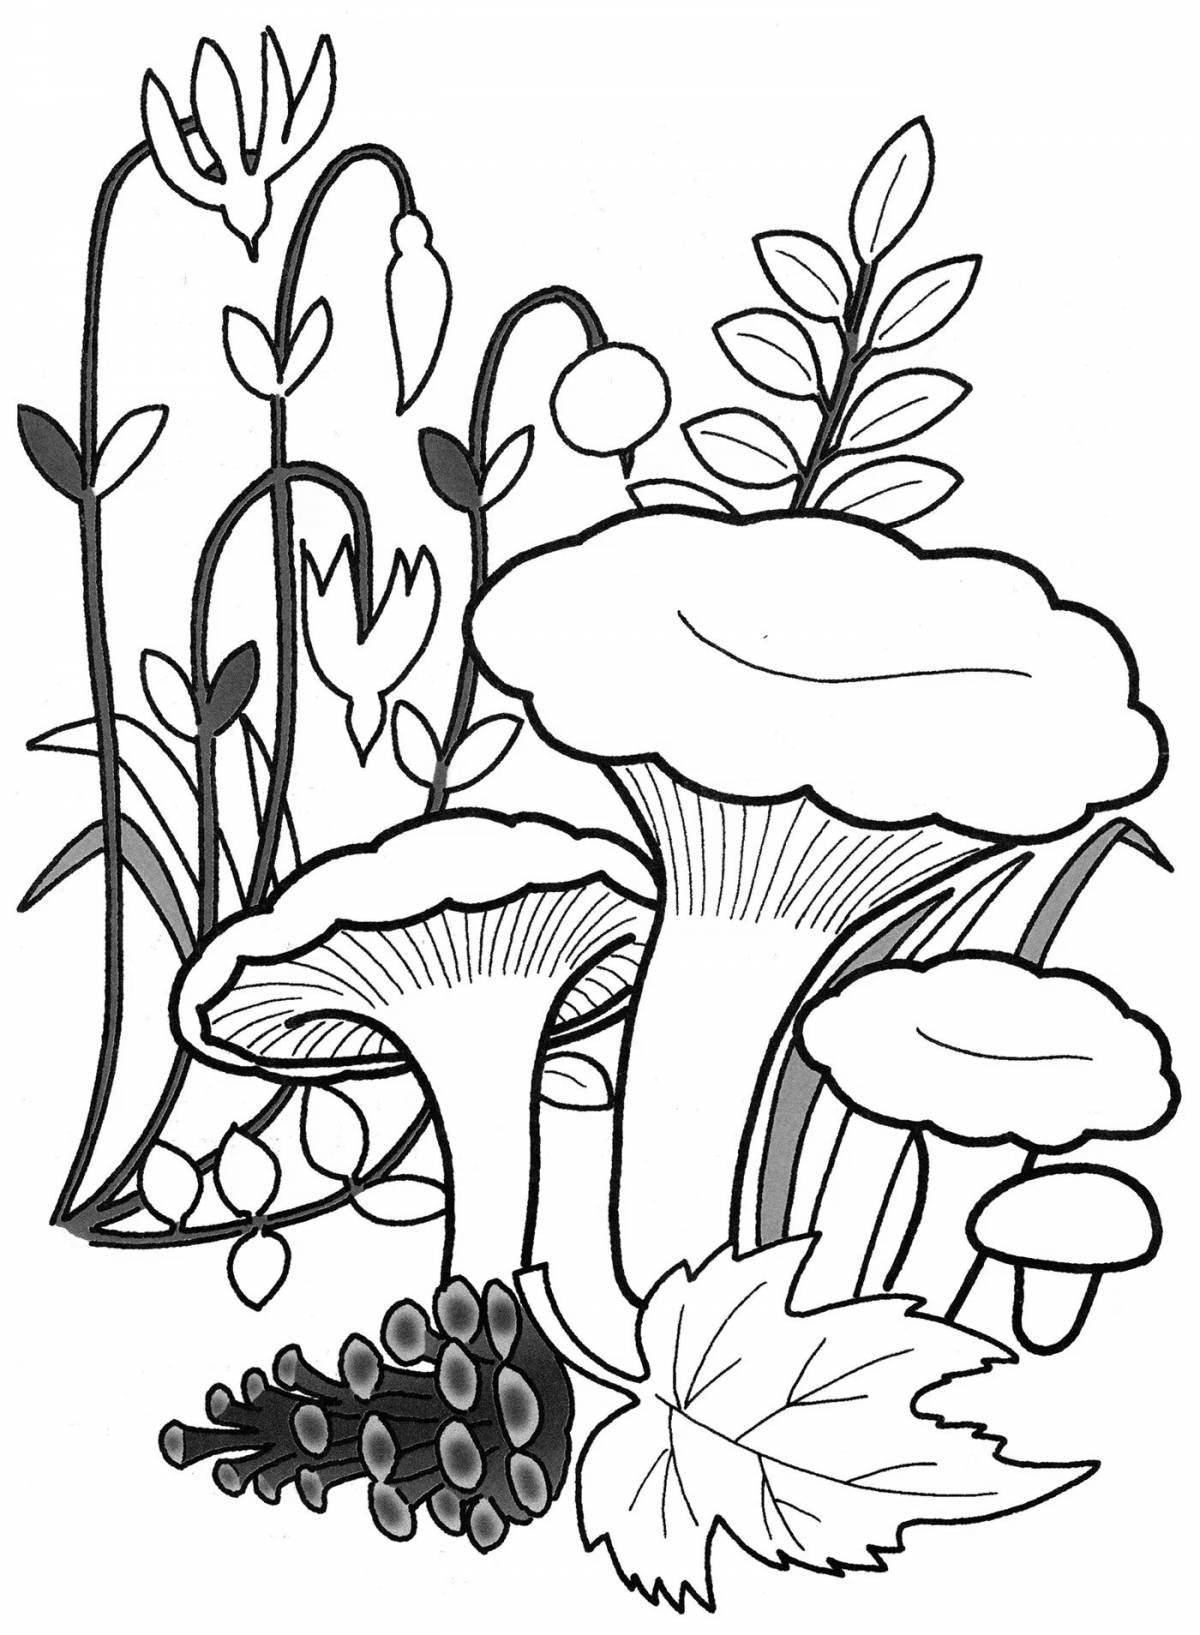 Coloring book brave chanterelle mushroom